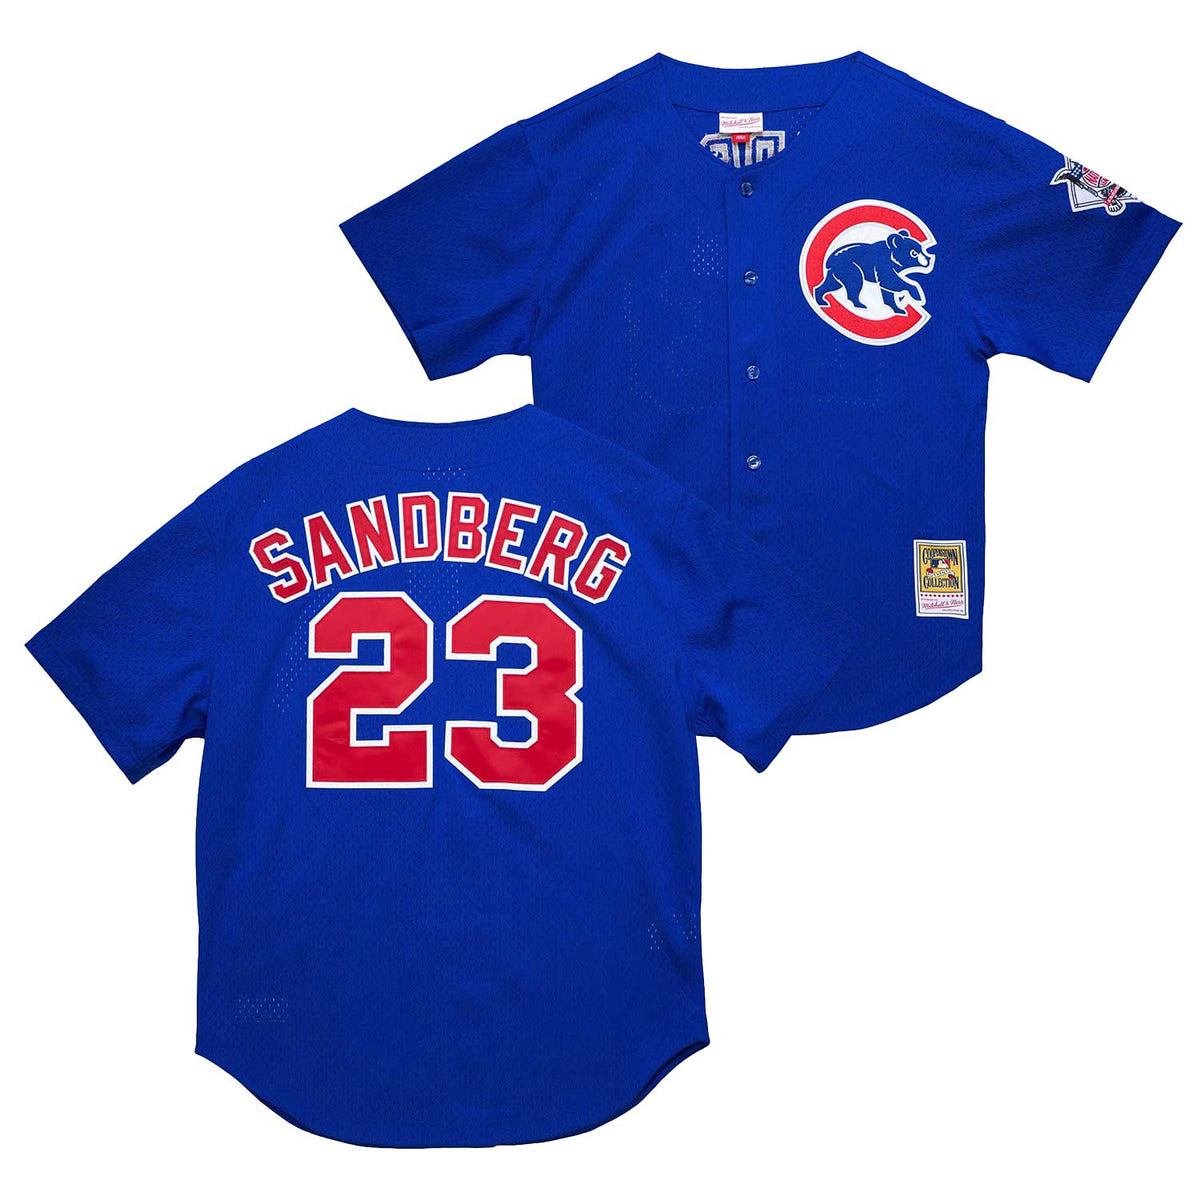 Chicago Cubs 1997 BP Ryne Sandberg MITCHELL AND NESS jersey